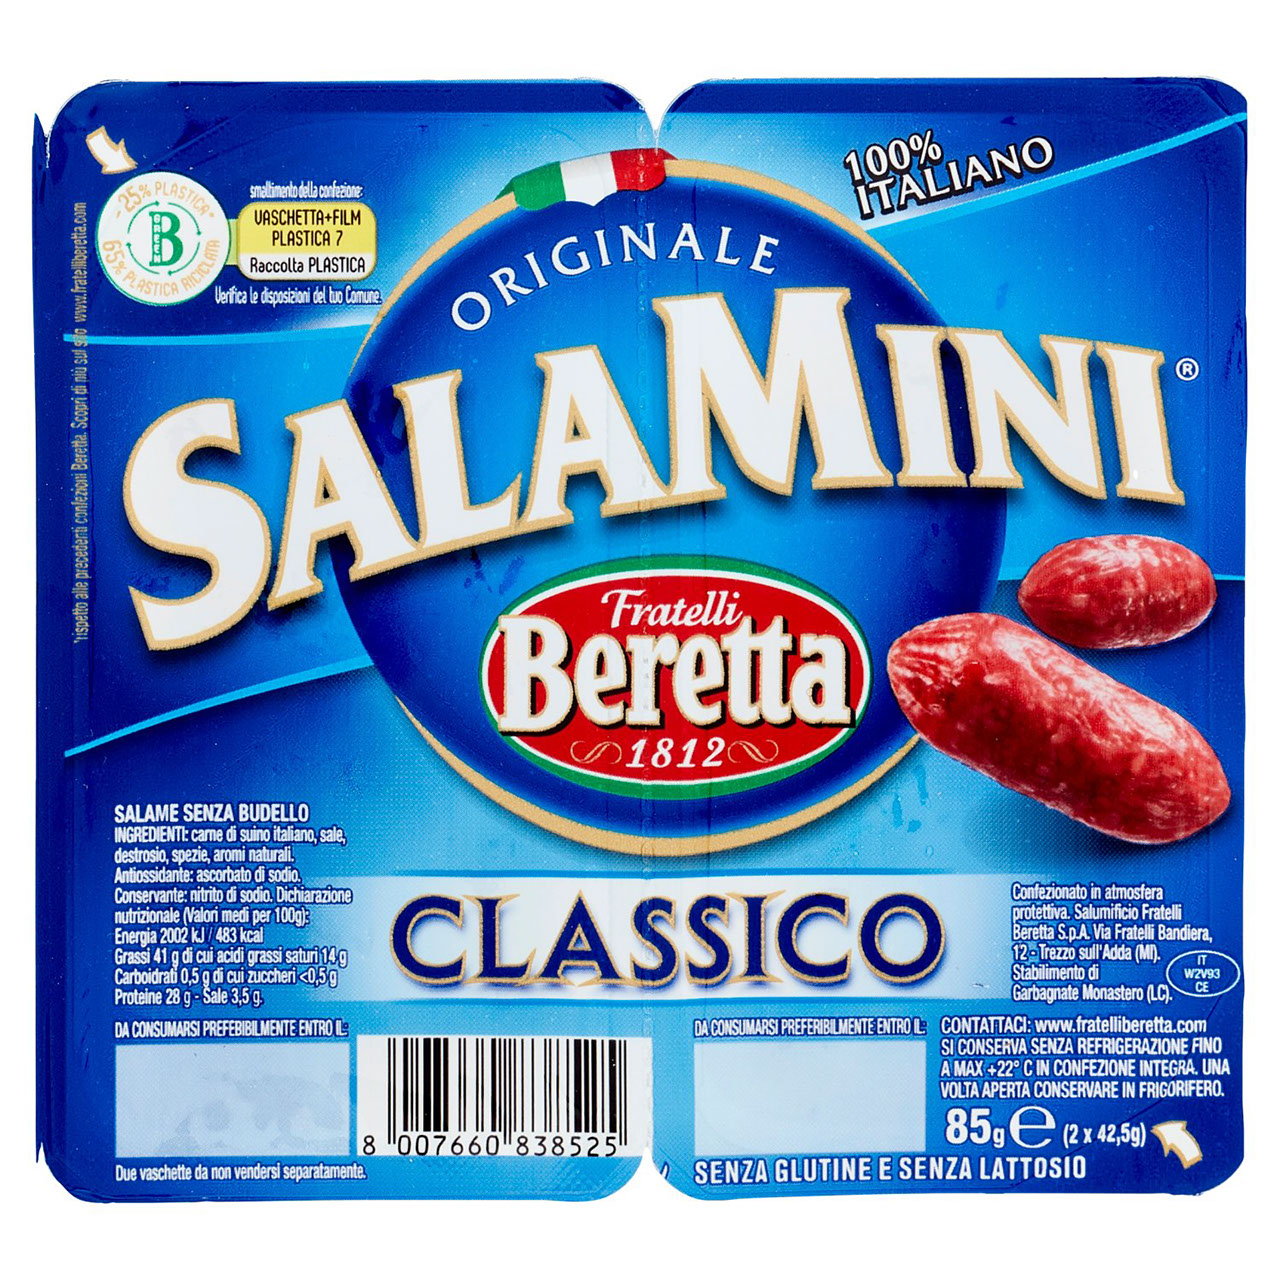 Fratelli Beretta SalaMini Classico 2 x 42,5 g